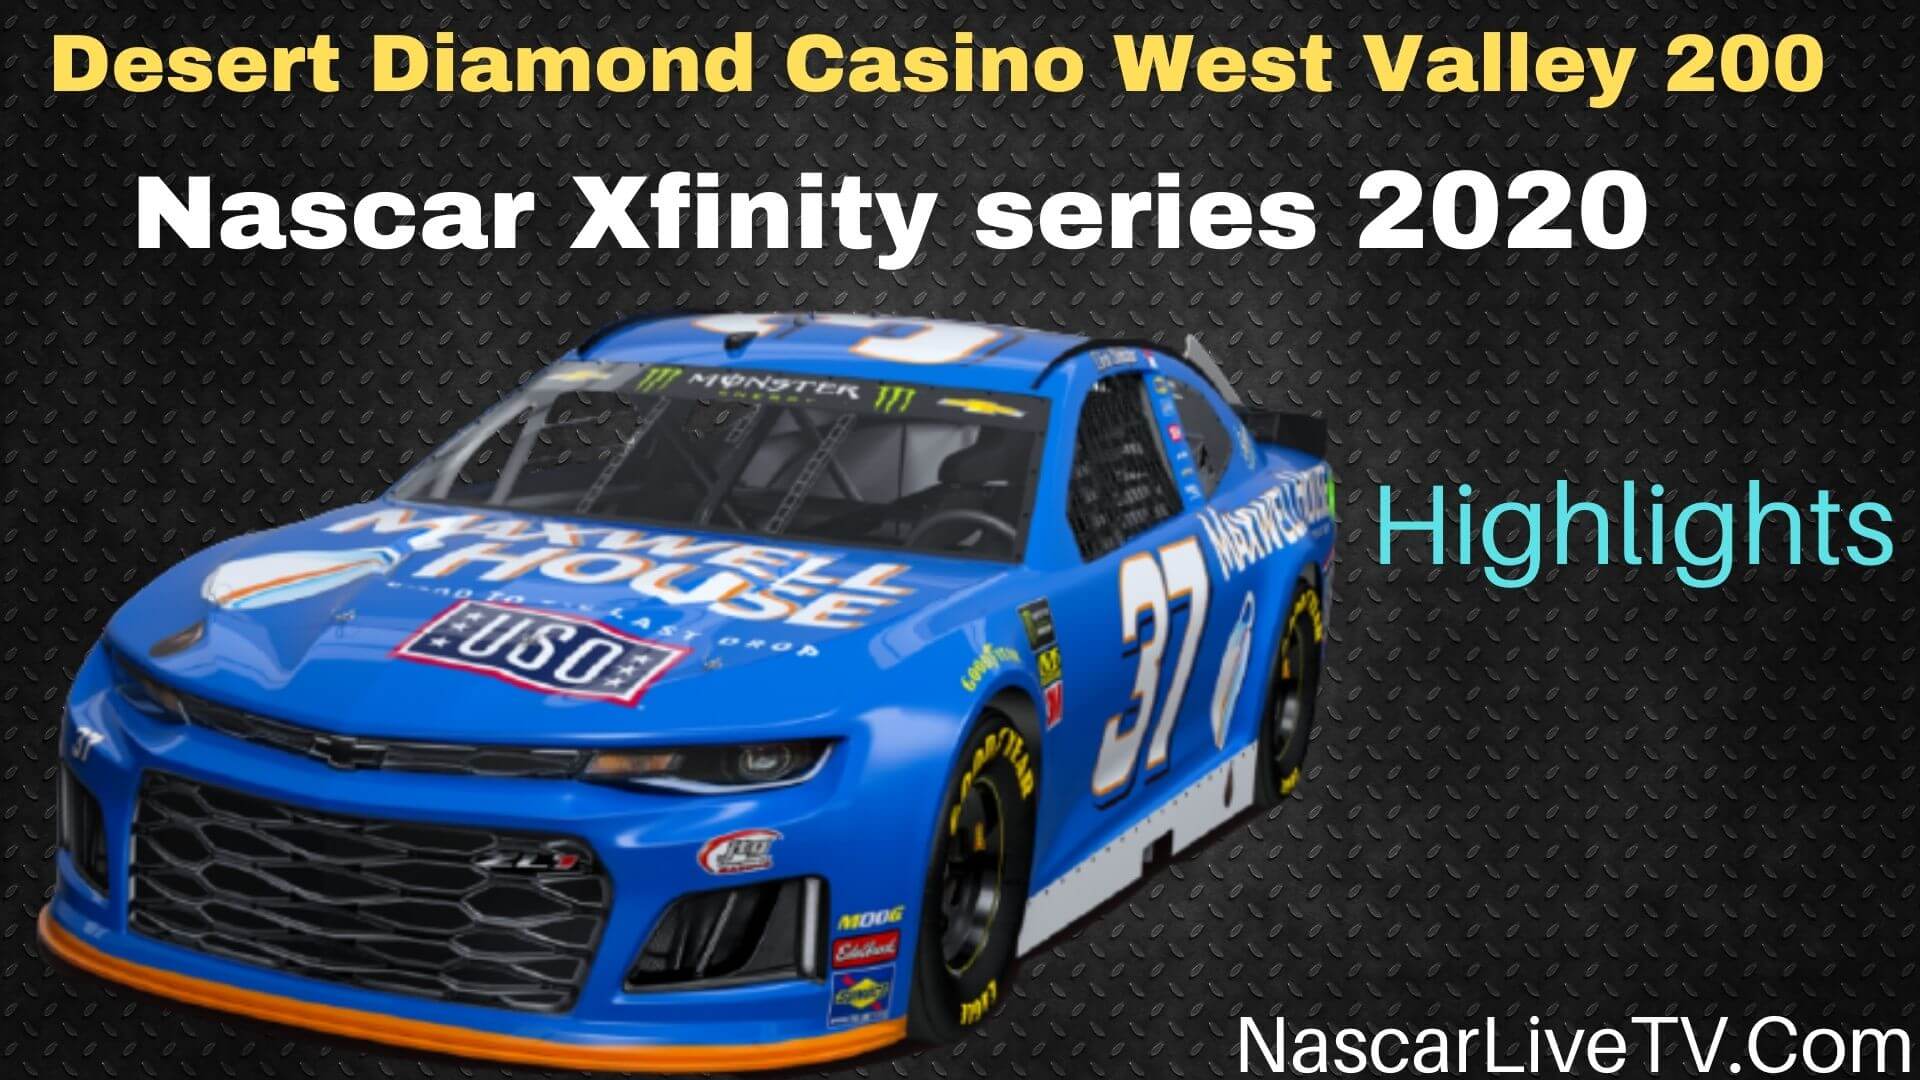 Desert Diamond Casino West Valley 200 NXS 2020 Highlights